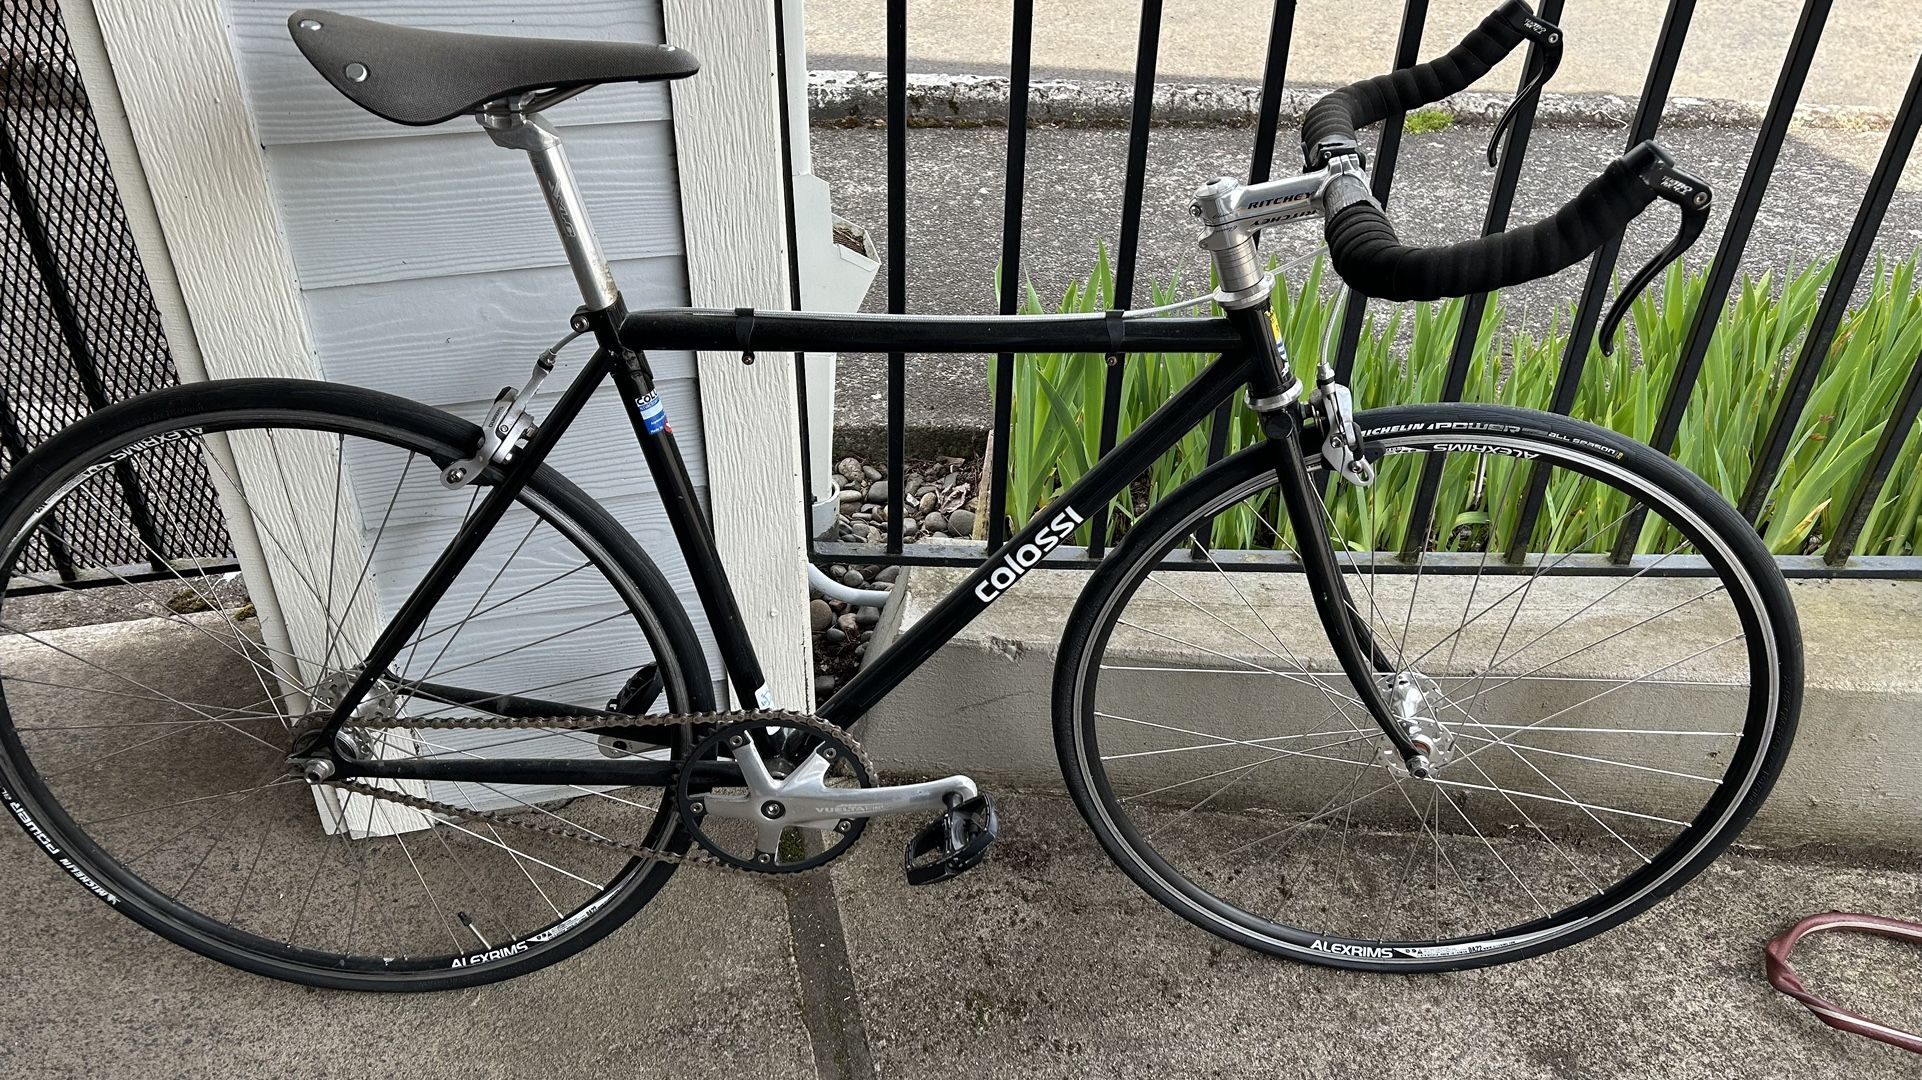 Custom Fixed Gear Road Bicycle